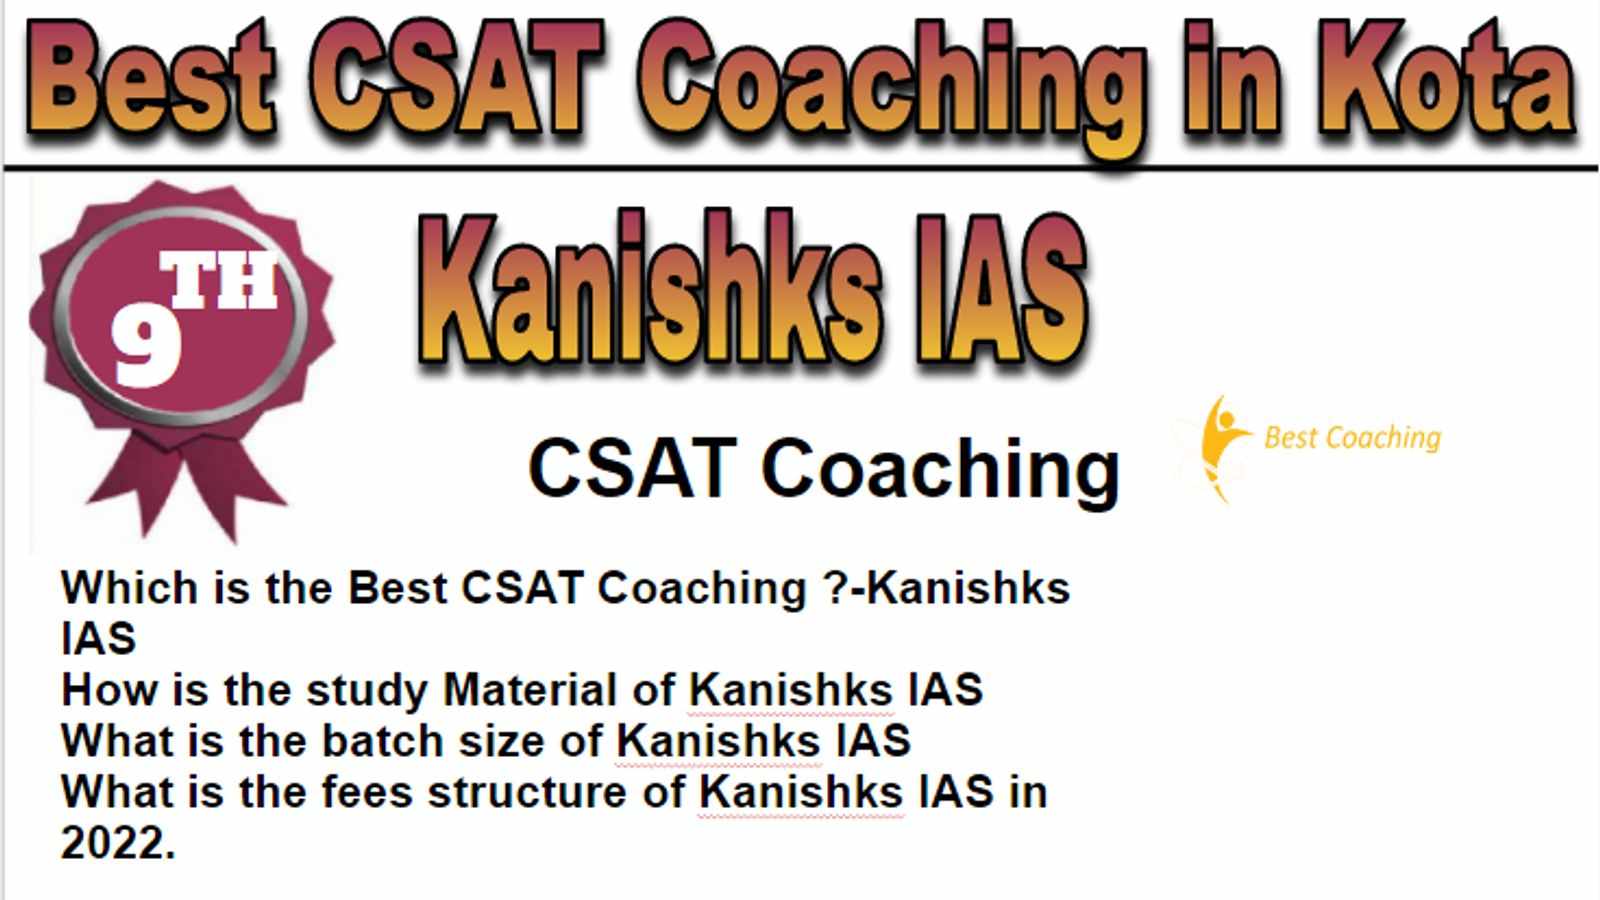 Rank 9 Best CSAT Coaching in Kota